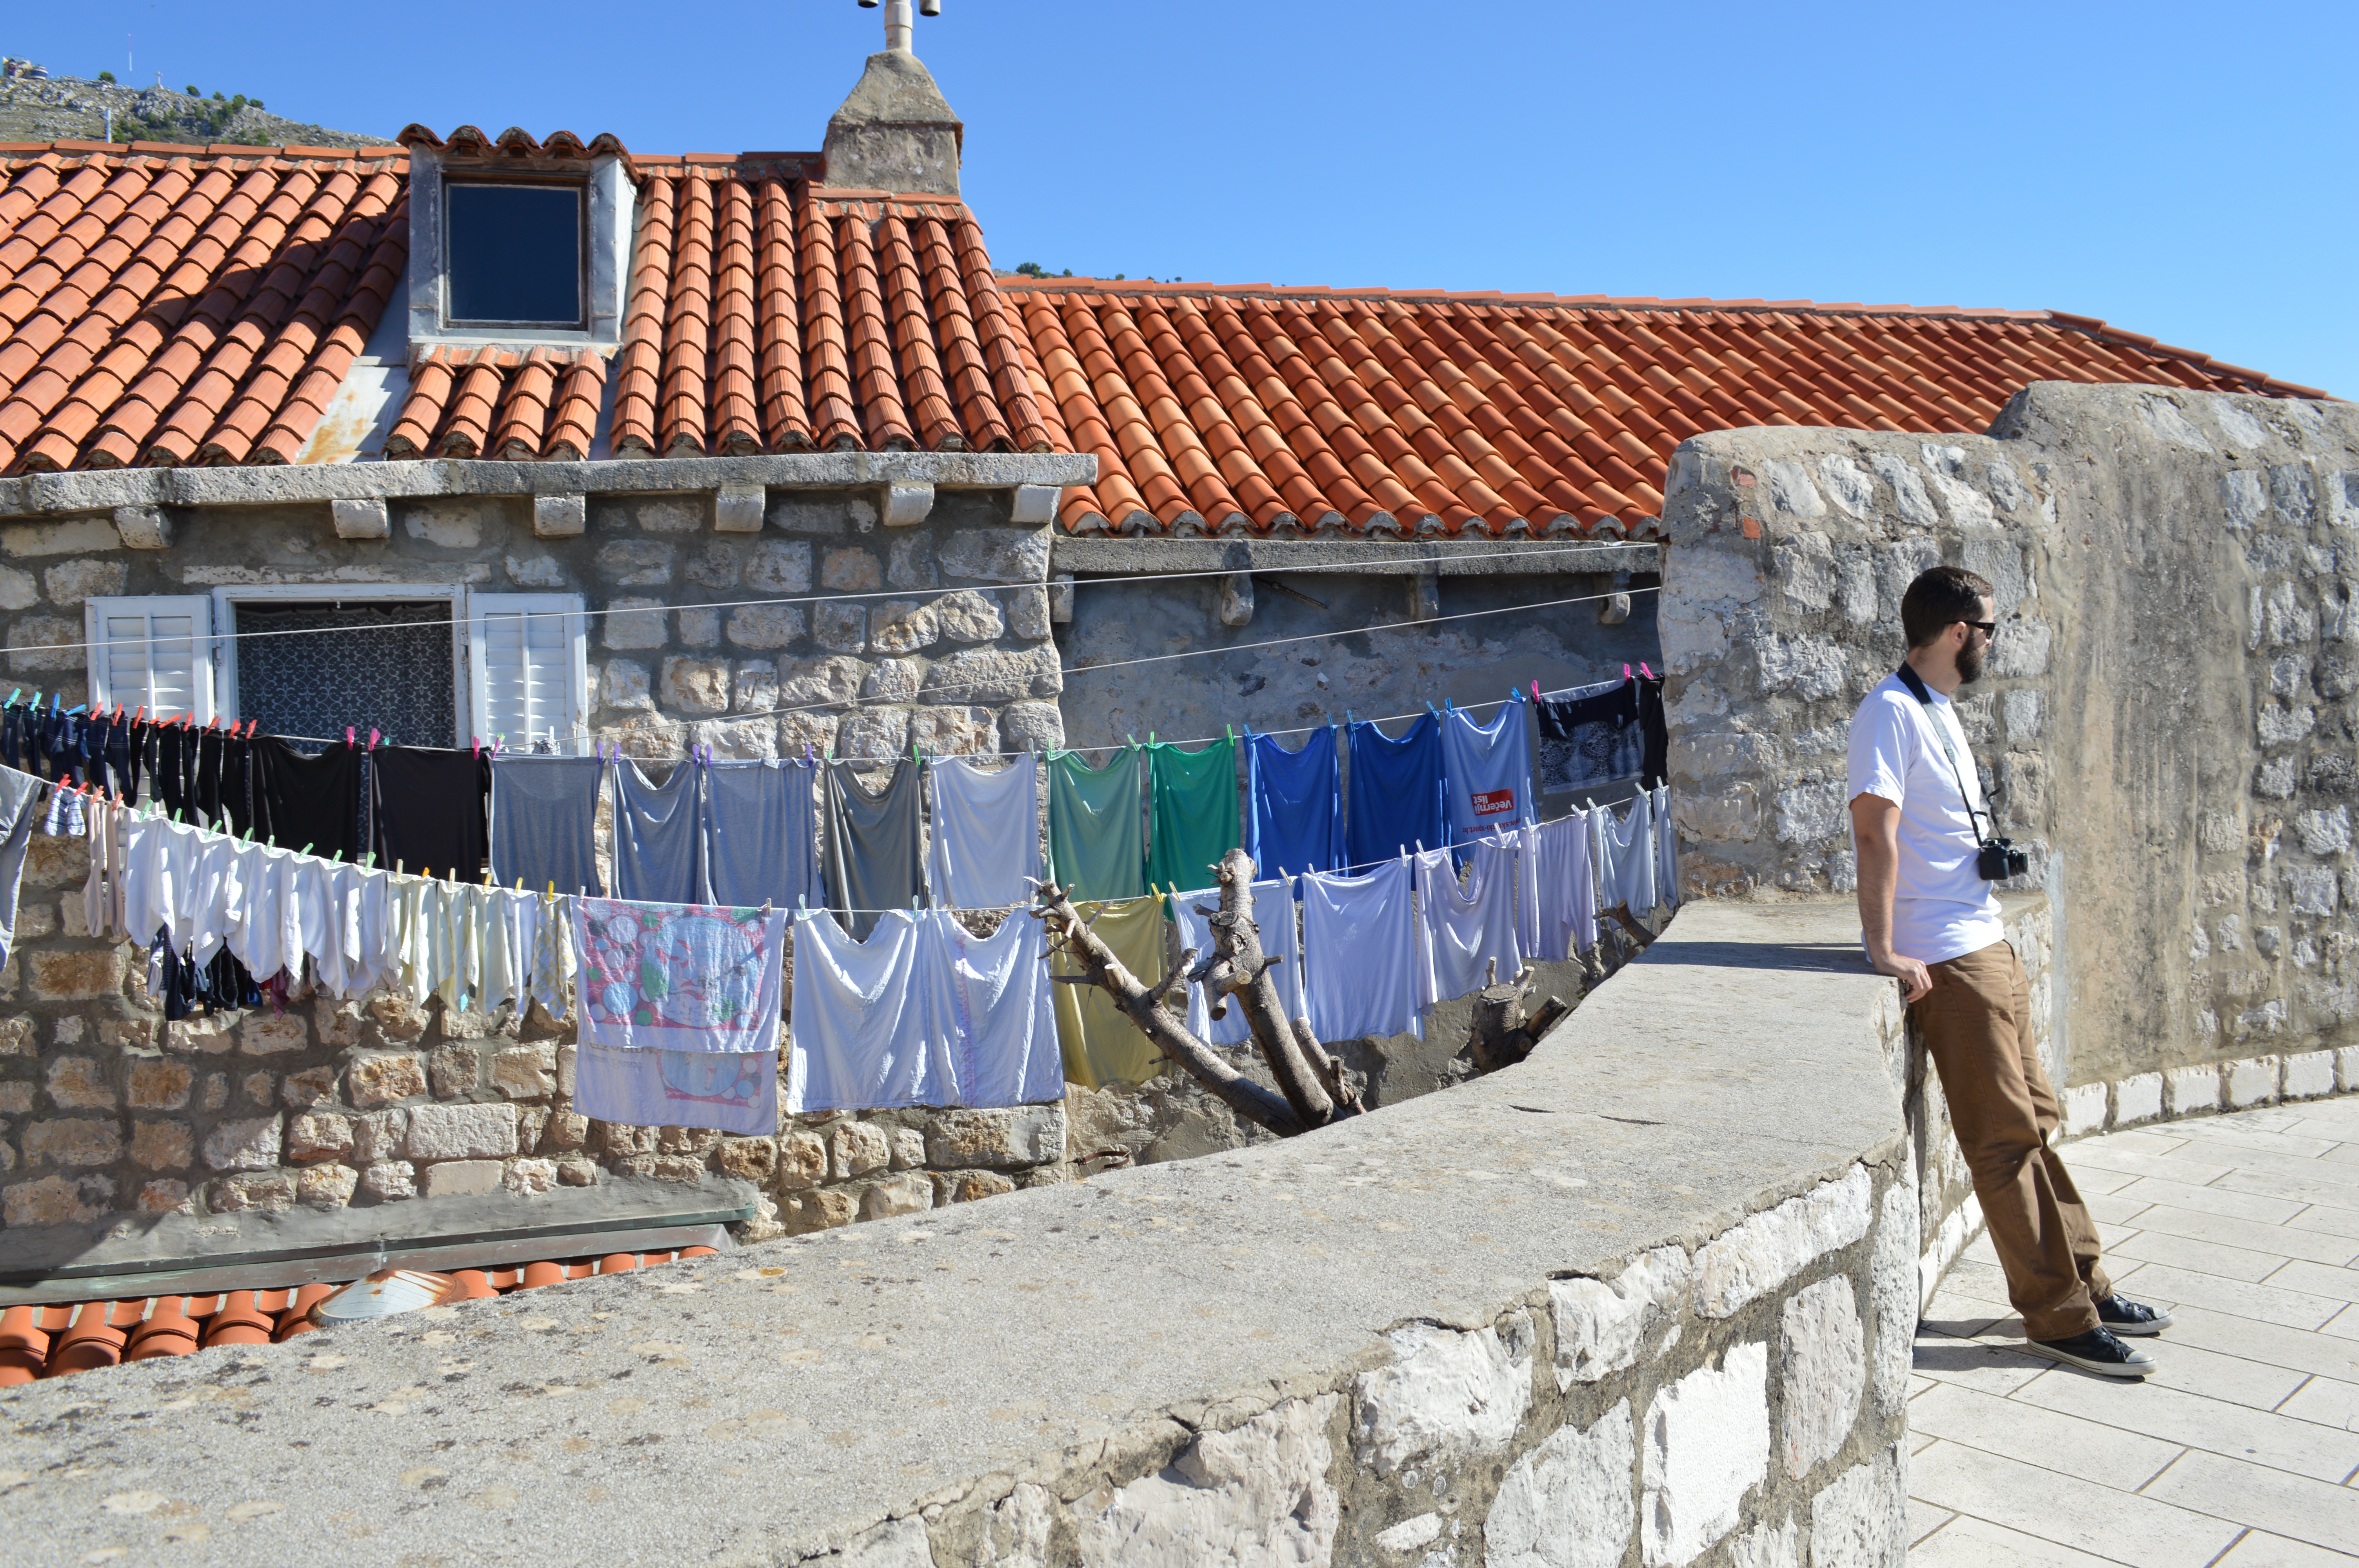 Hanging laundry, Dubrovnik - cultivatedrambler.com